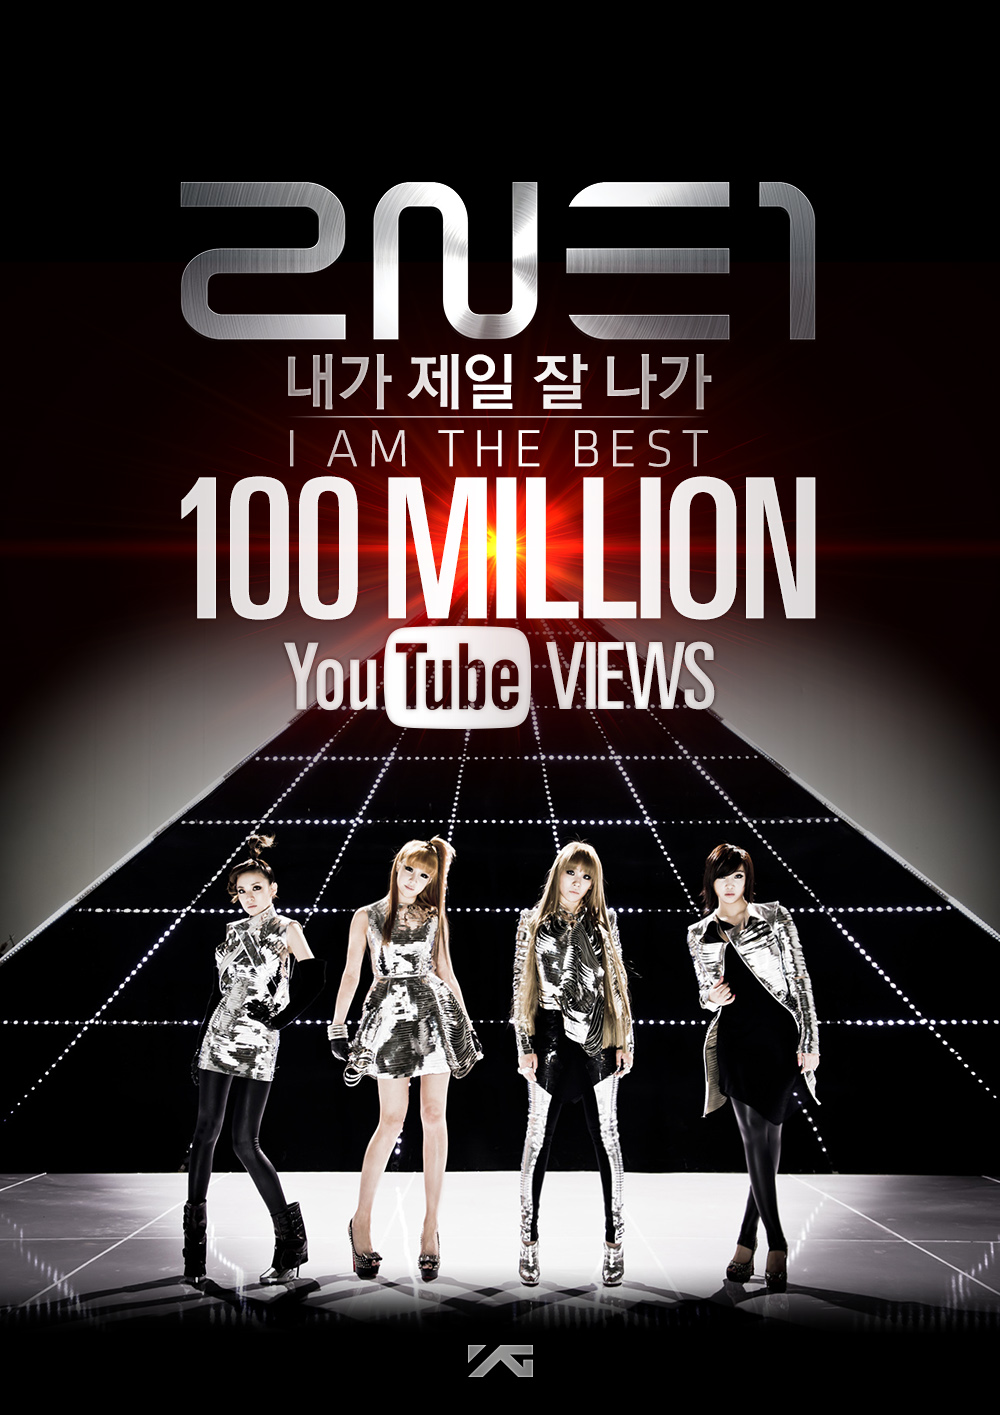 2NE1′s “I Am the Best” MV Hits 100 Million Views on YouTube - 빅뱅  BIGBANGmusic